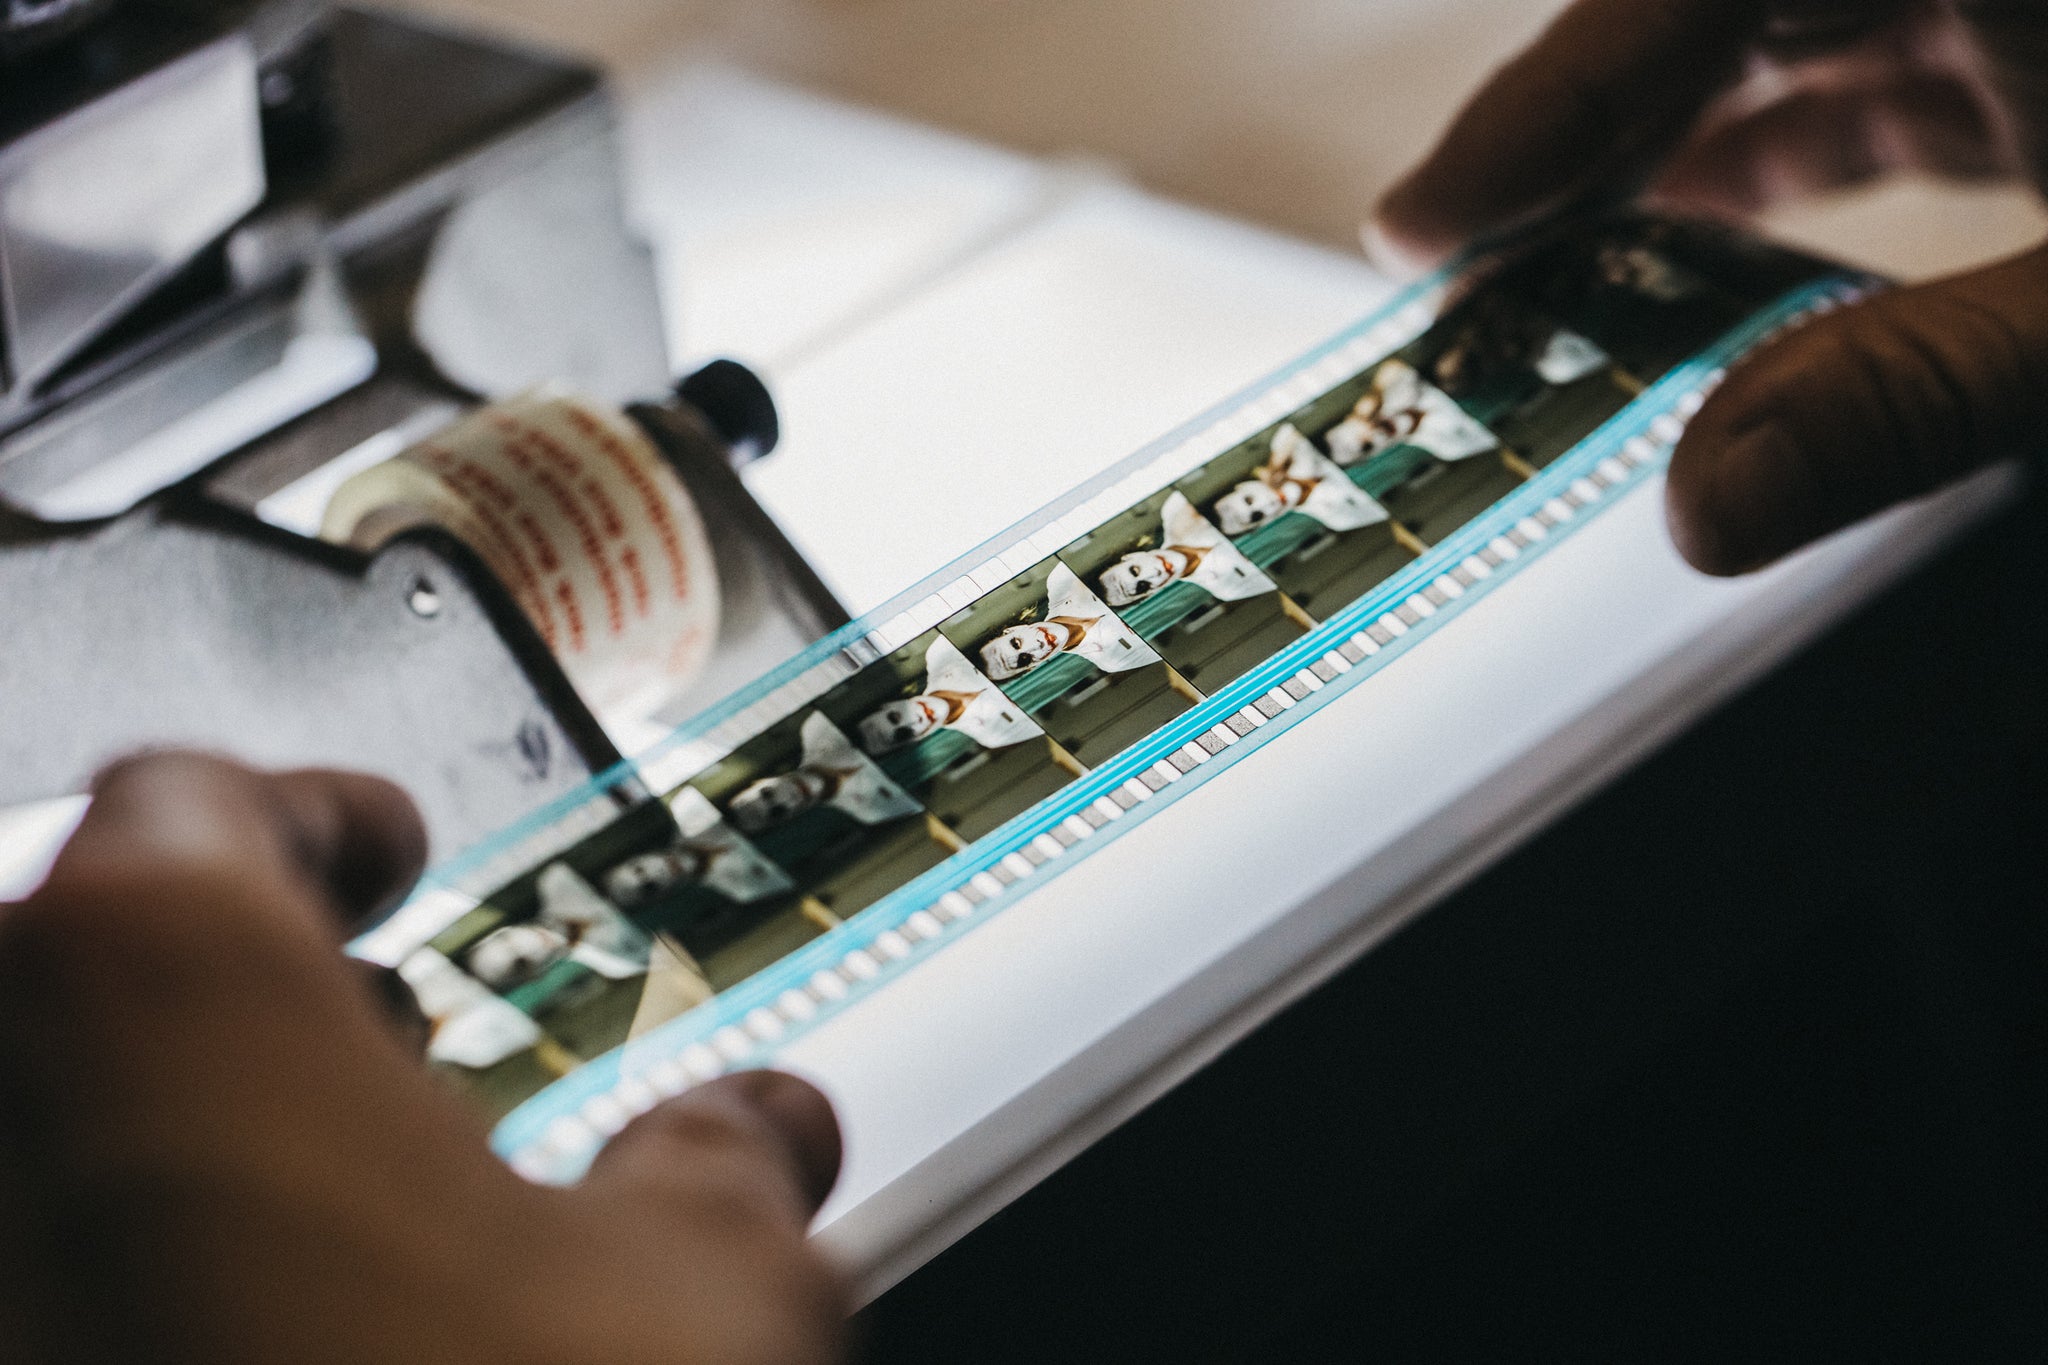 Hands inspect 35mm film up close